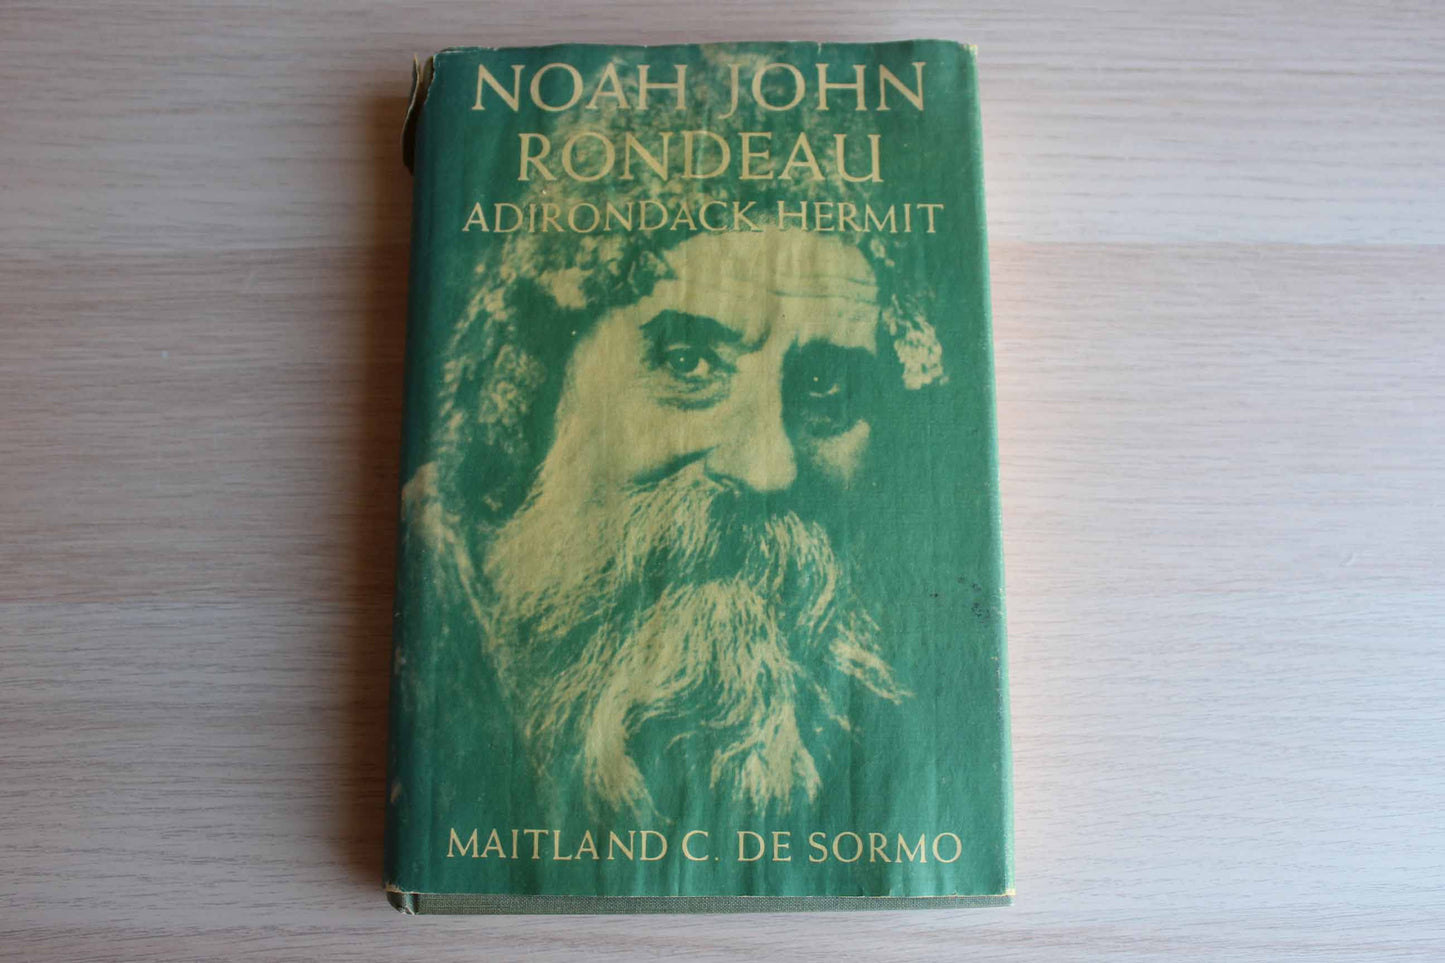 Noah John Rondeau: Adirondack Hermit by Maitland C. De Sormo